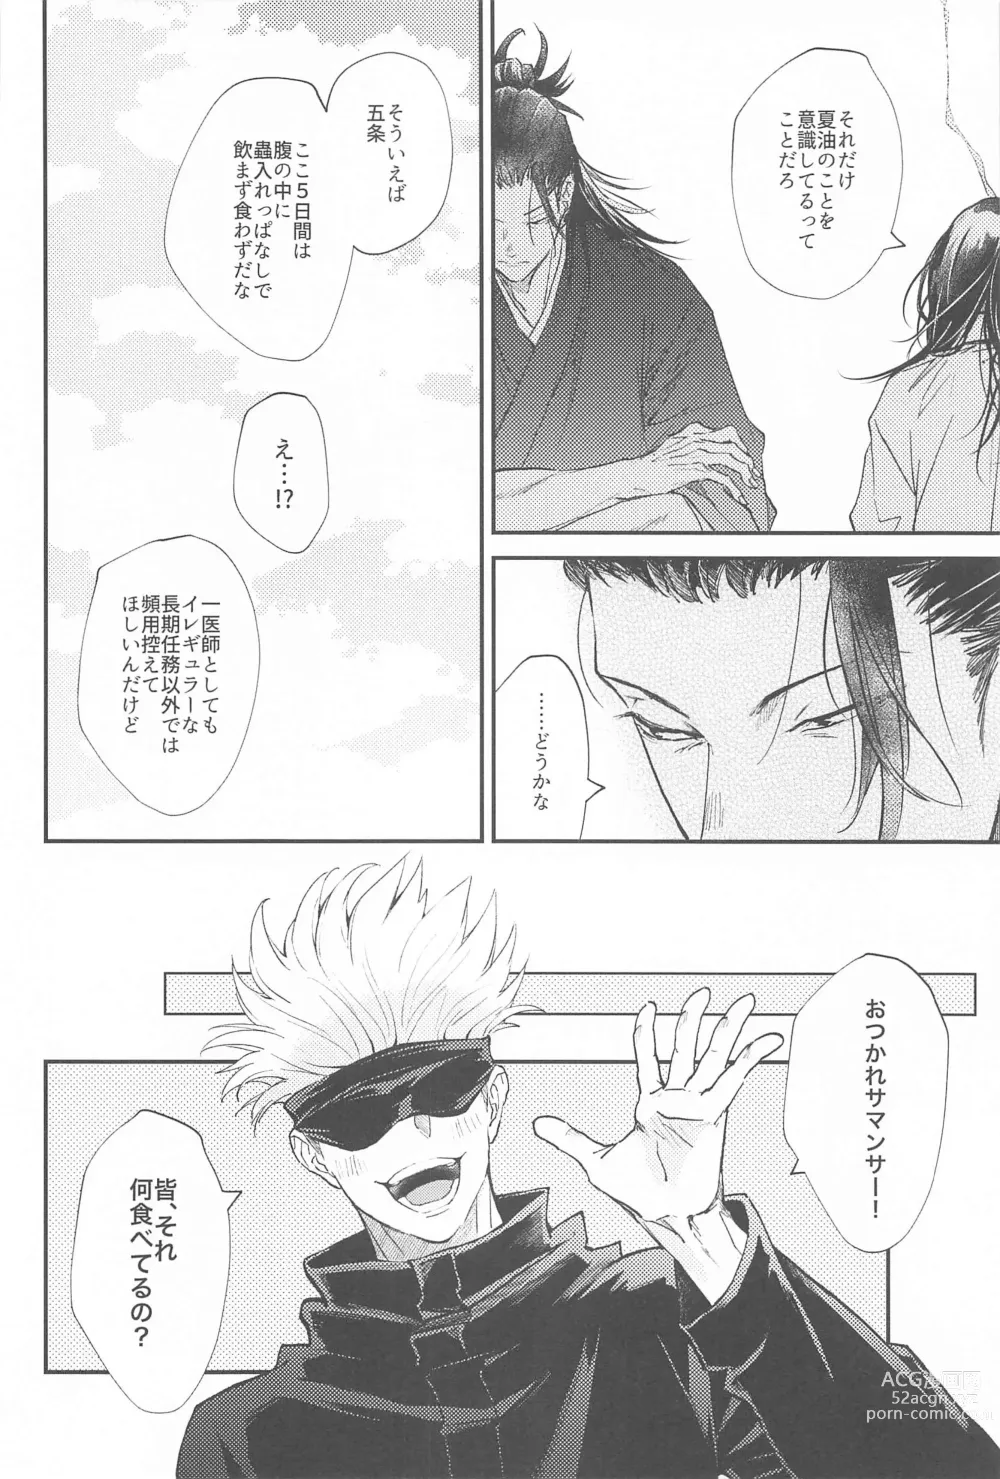 Page 5 of doujinshi Kojirase Blue to Koi Wazurai 2